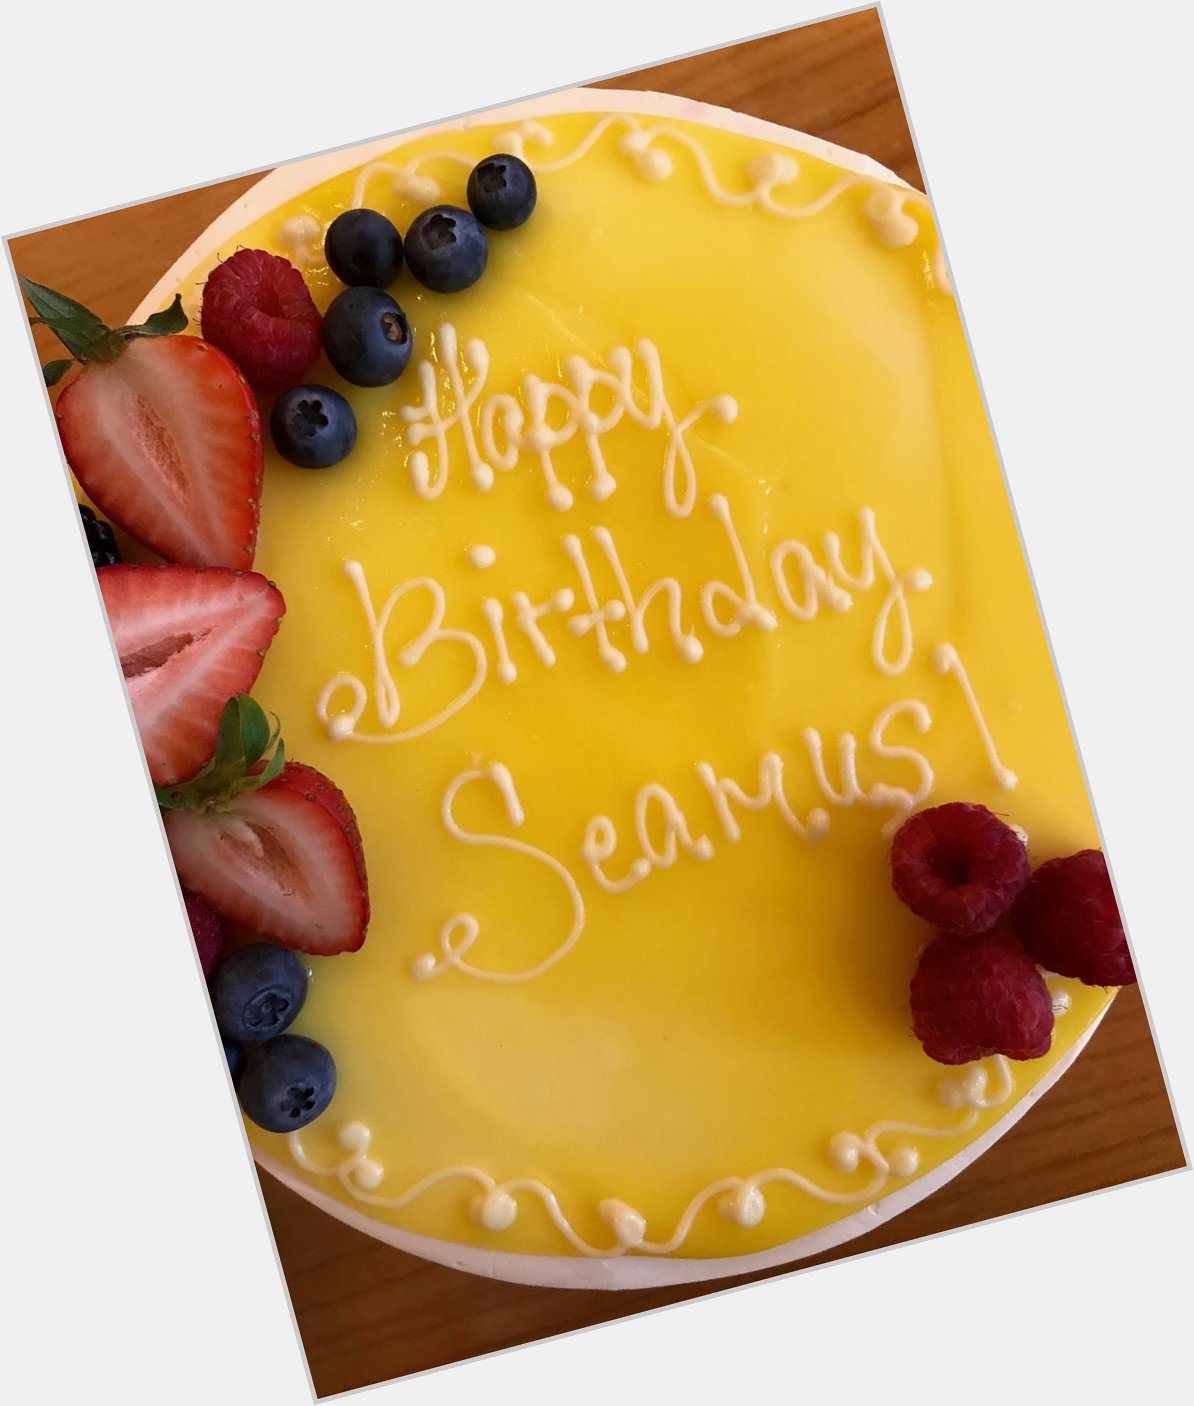 Happy Birthday, Seamus Heaney!  